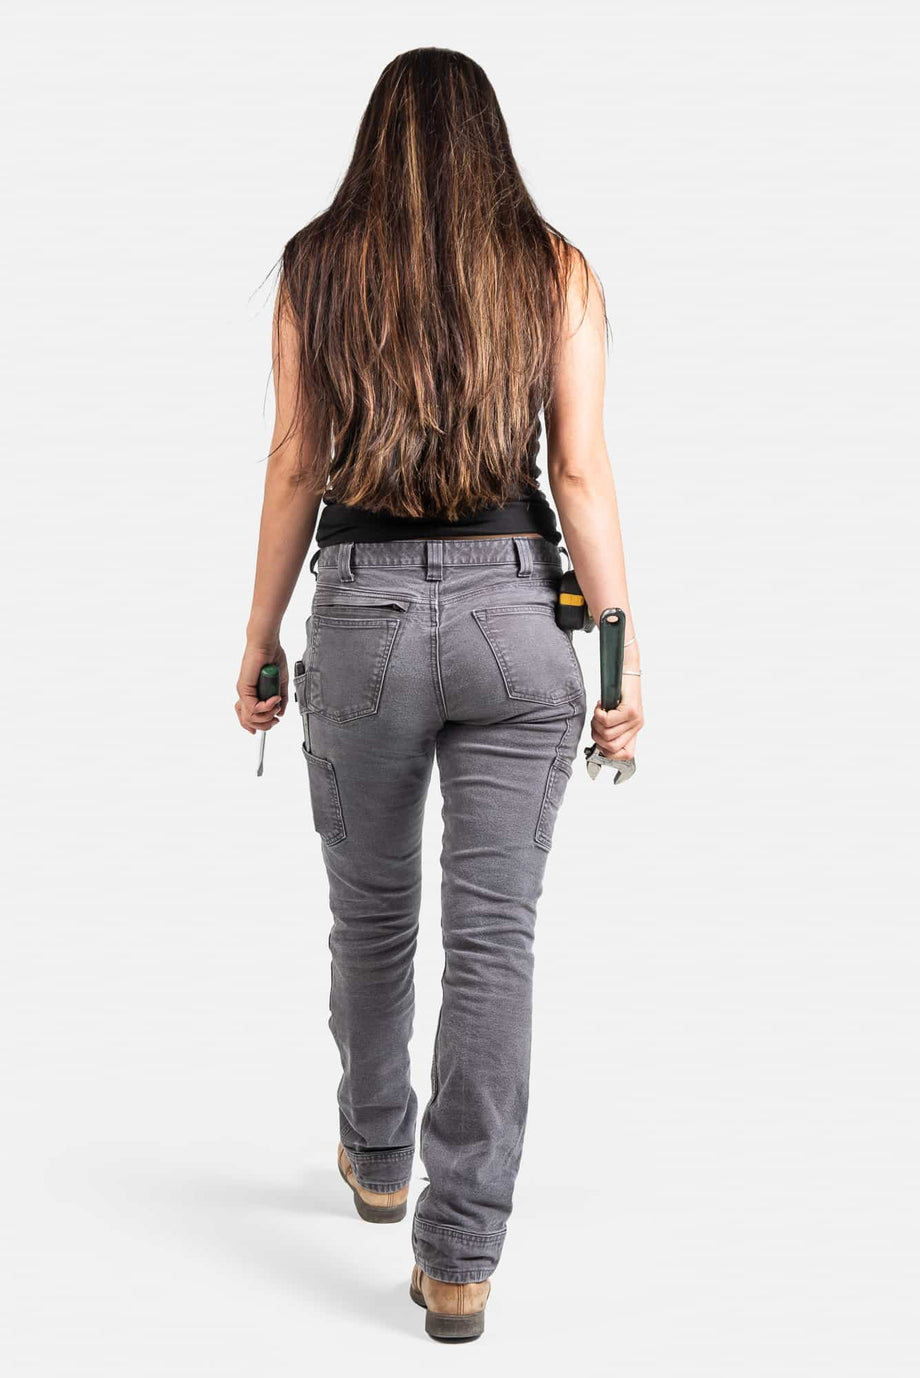 Dovetail Workwear Women's Britt Utility Canvas Pants